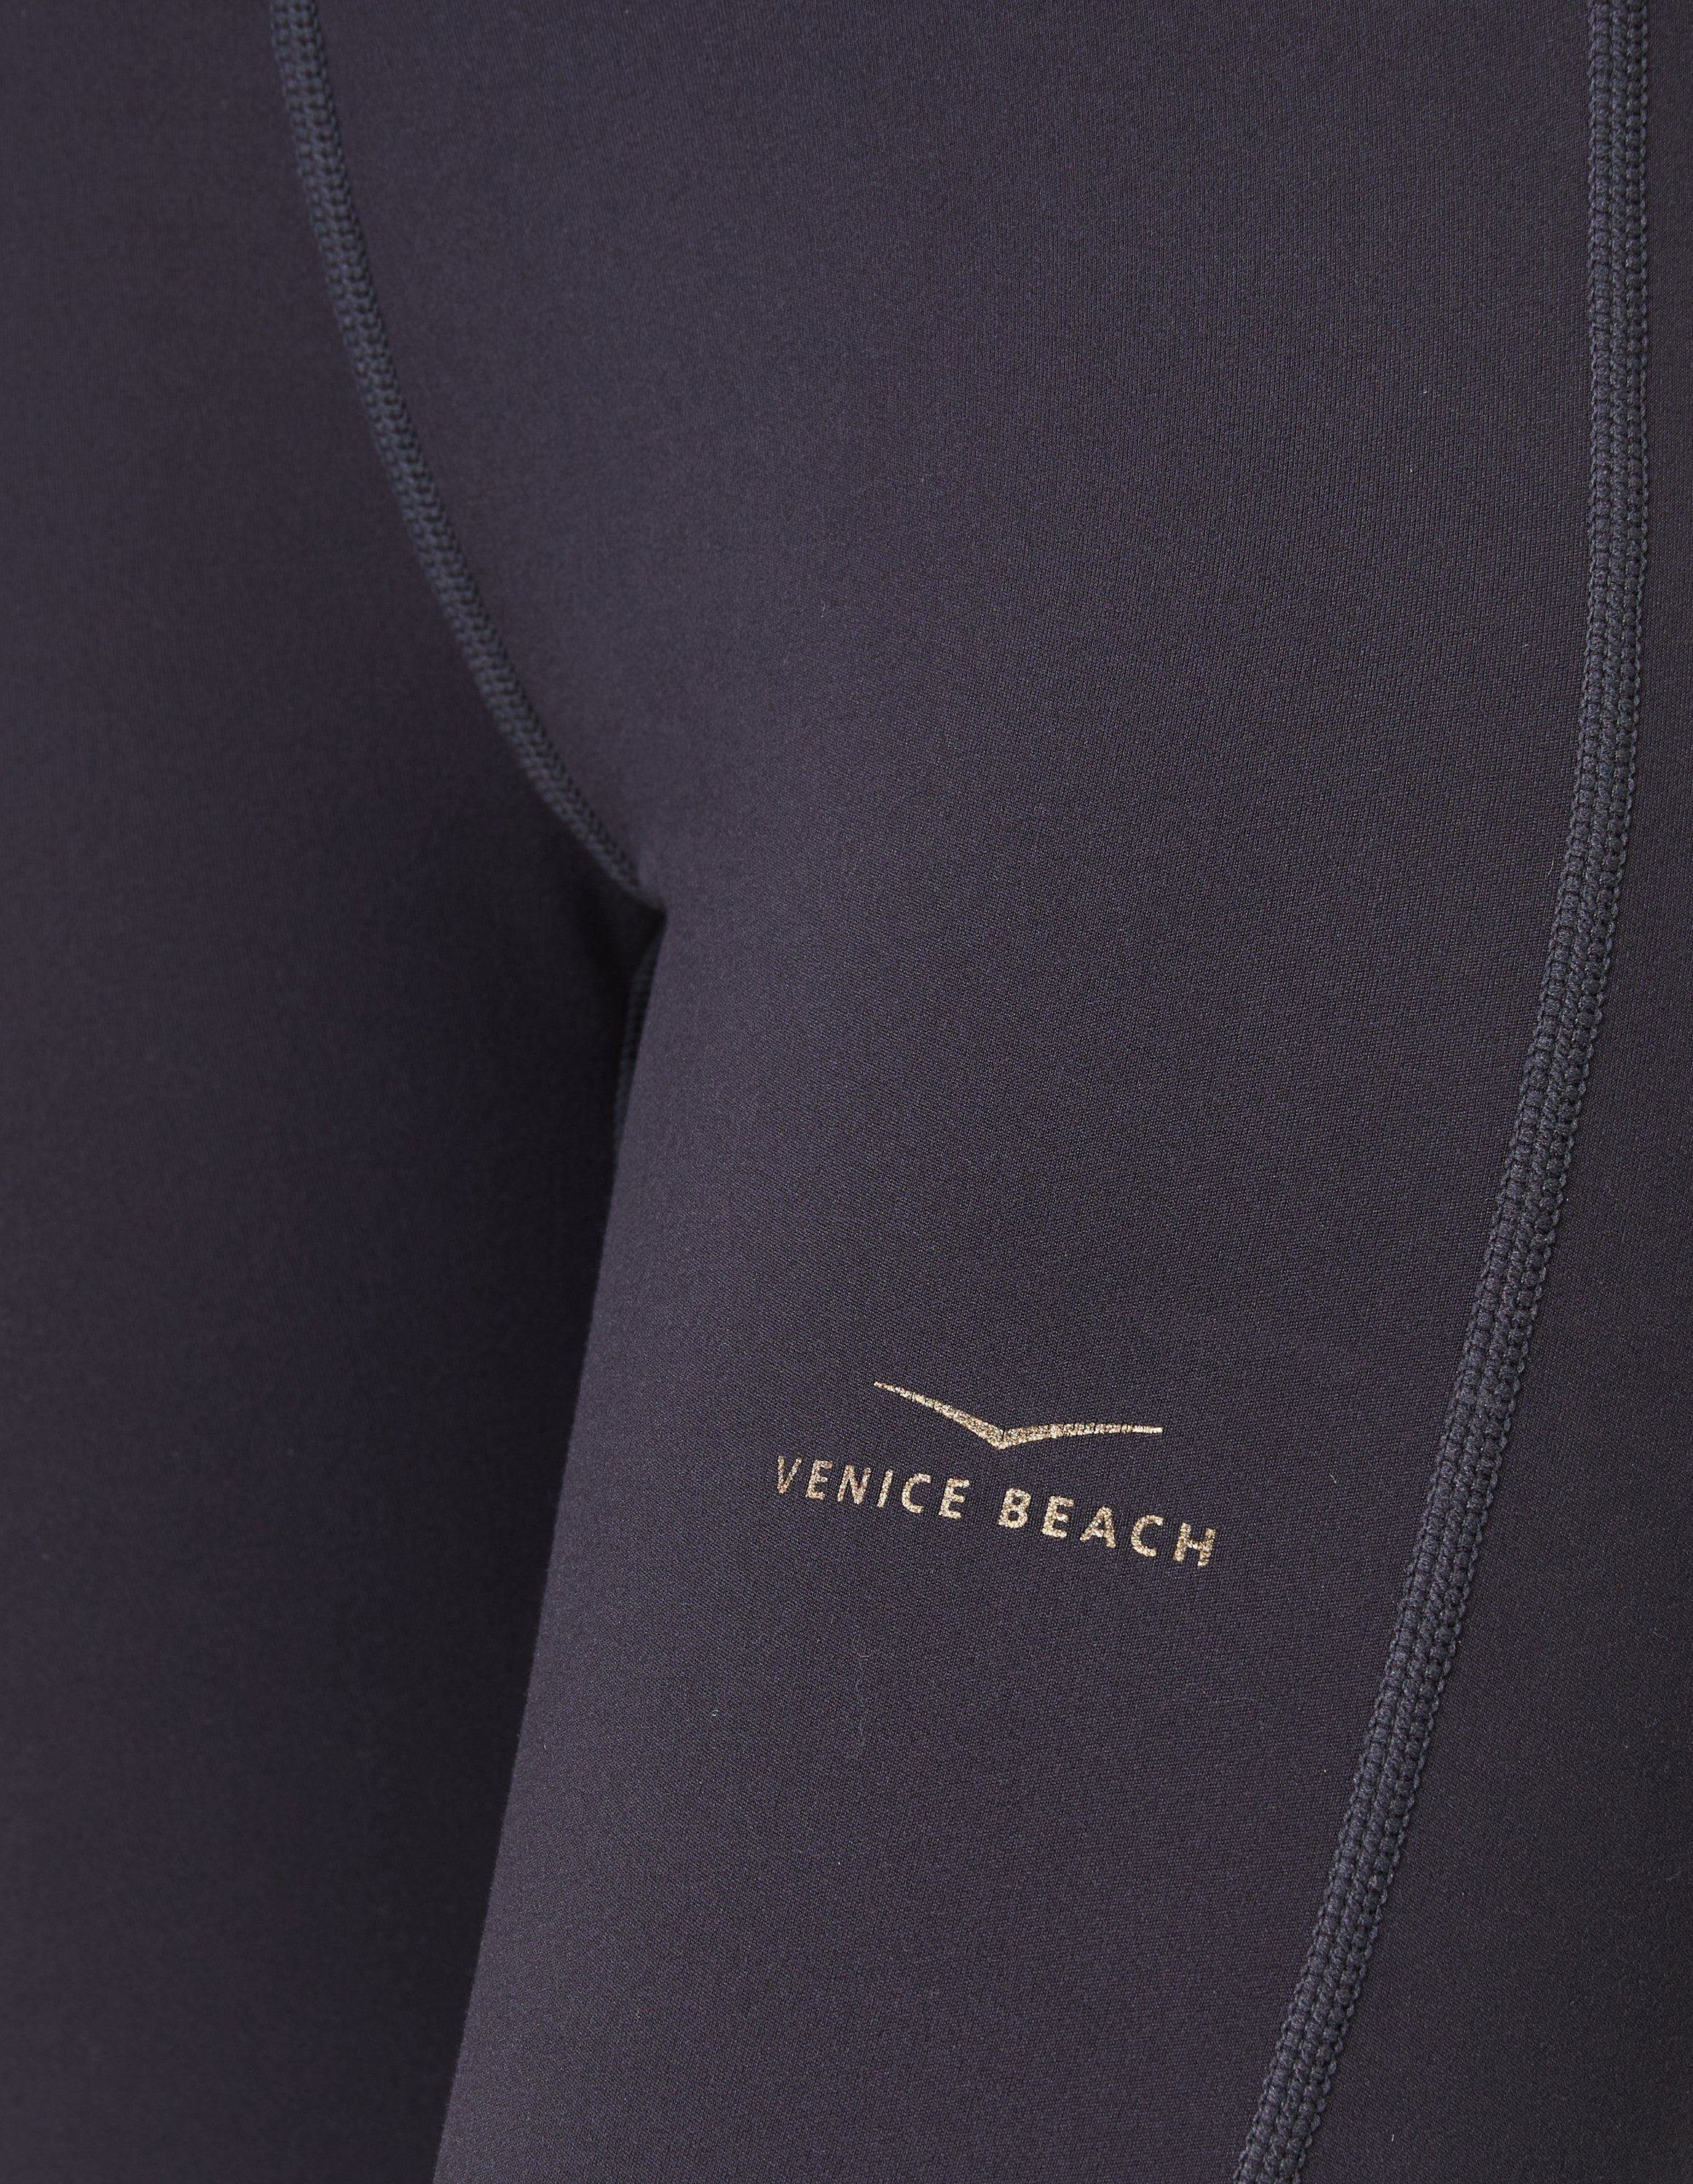 Tights VB Beach Venice Kaelie black charcoal Trainingstights